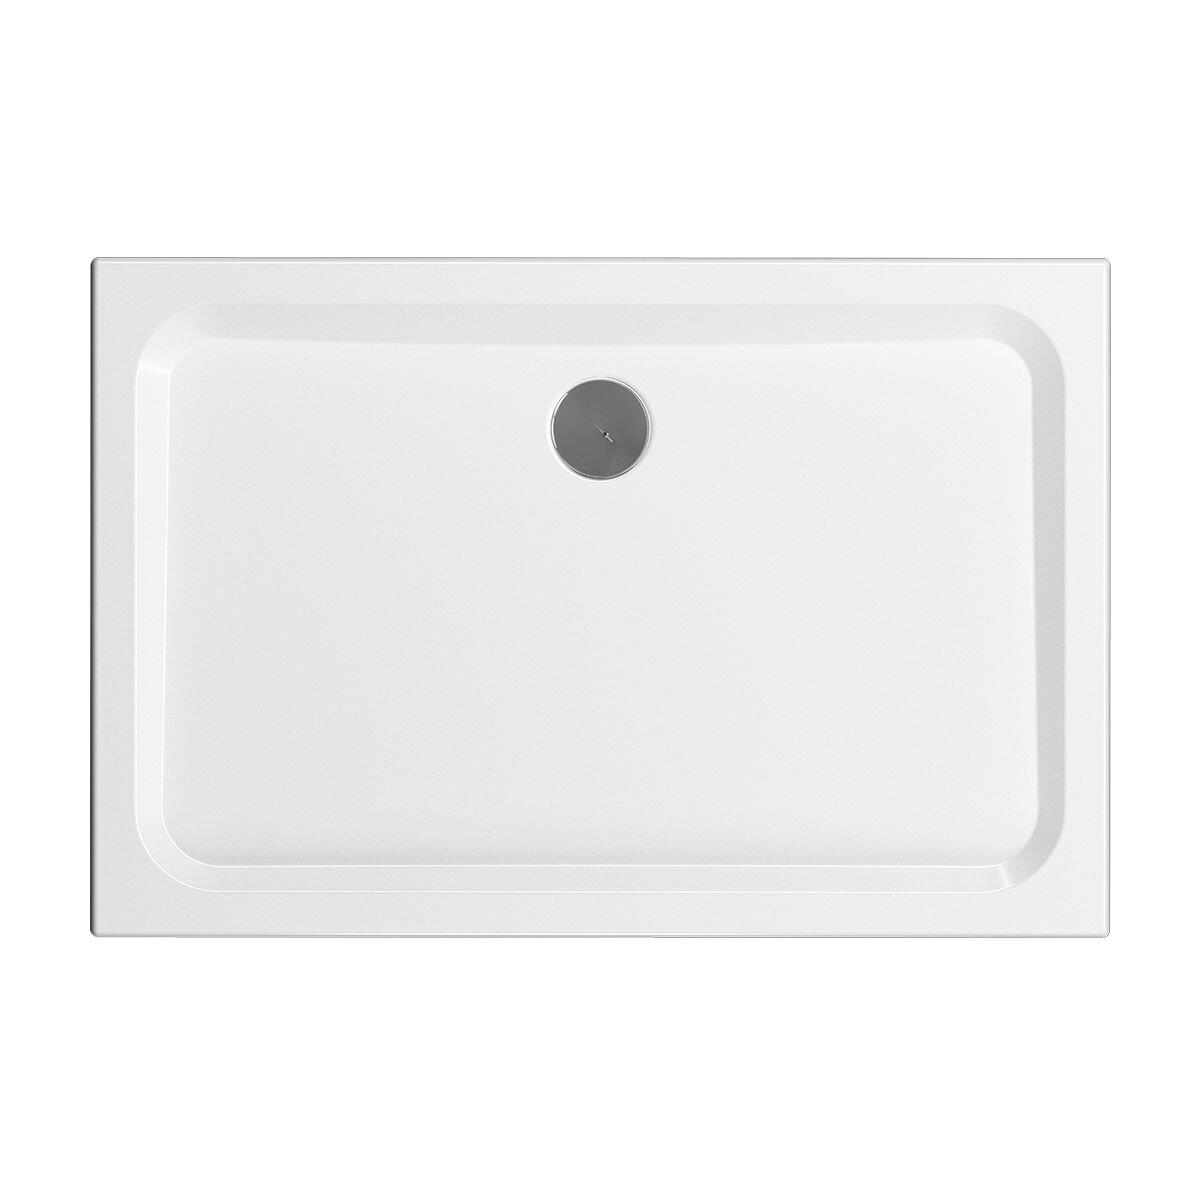 64150002000-Vitra Optimum Neo 120x80 cm Dikdörtgen Monoblok Gövde - Beyaz